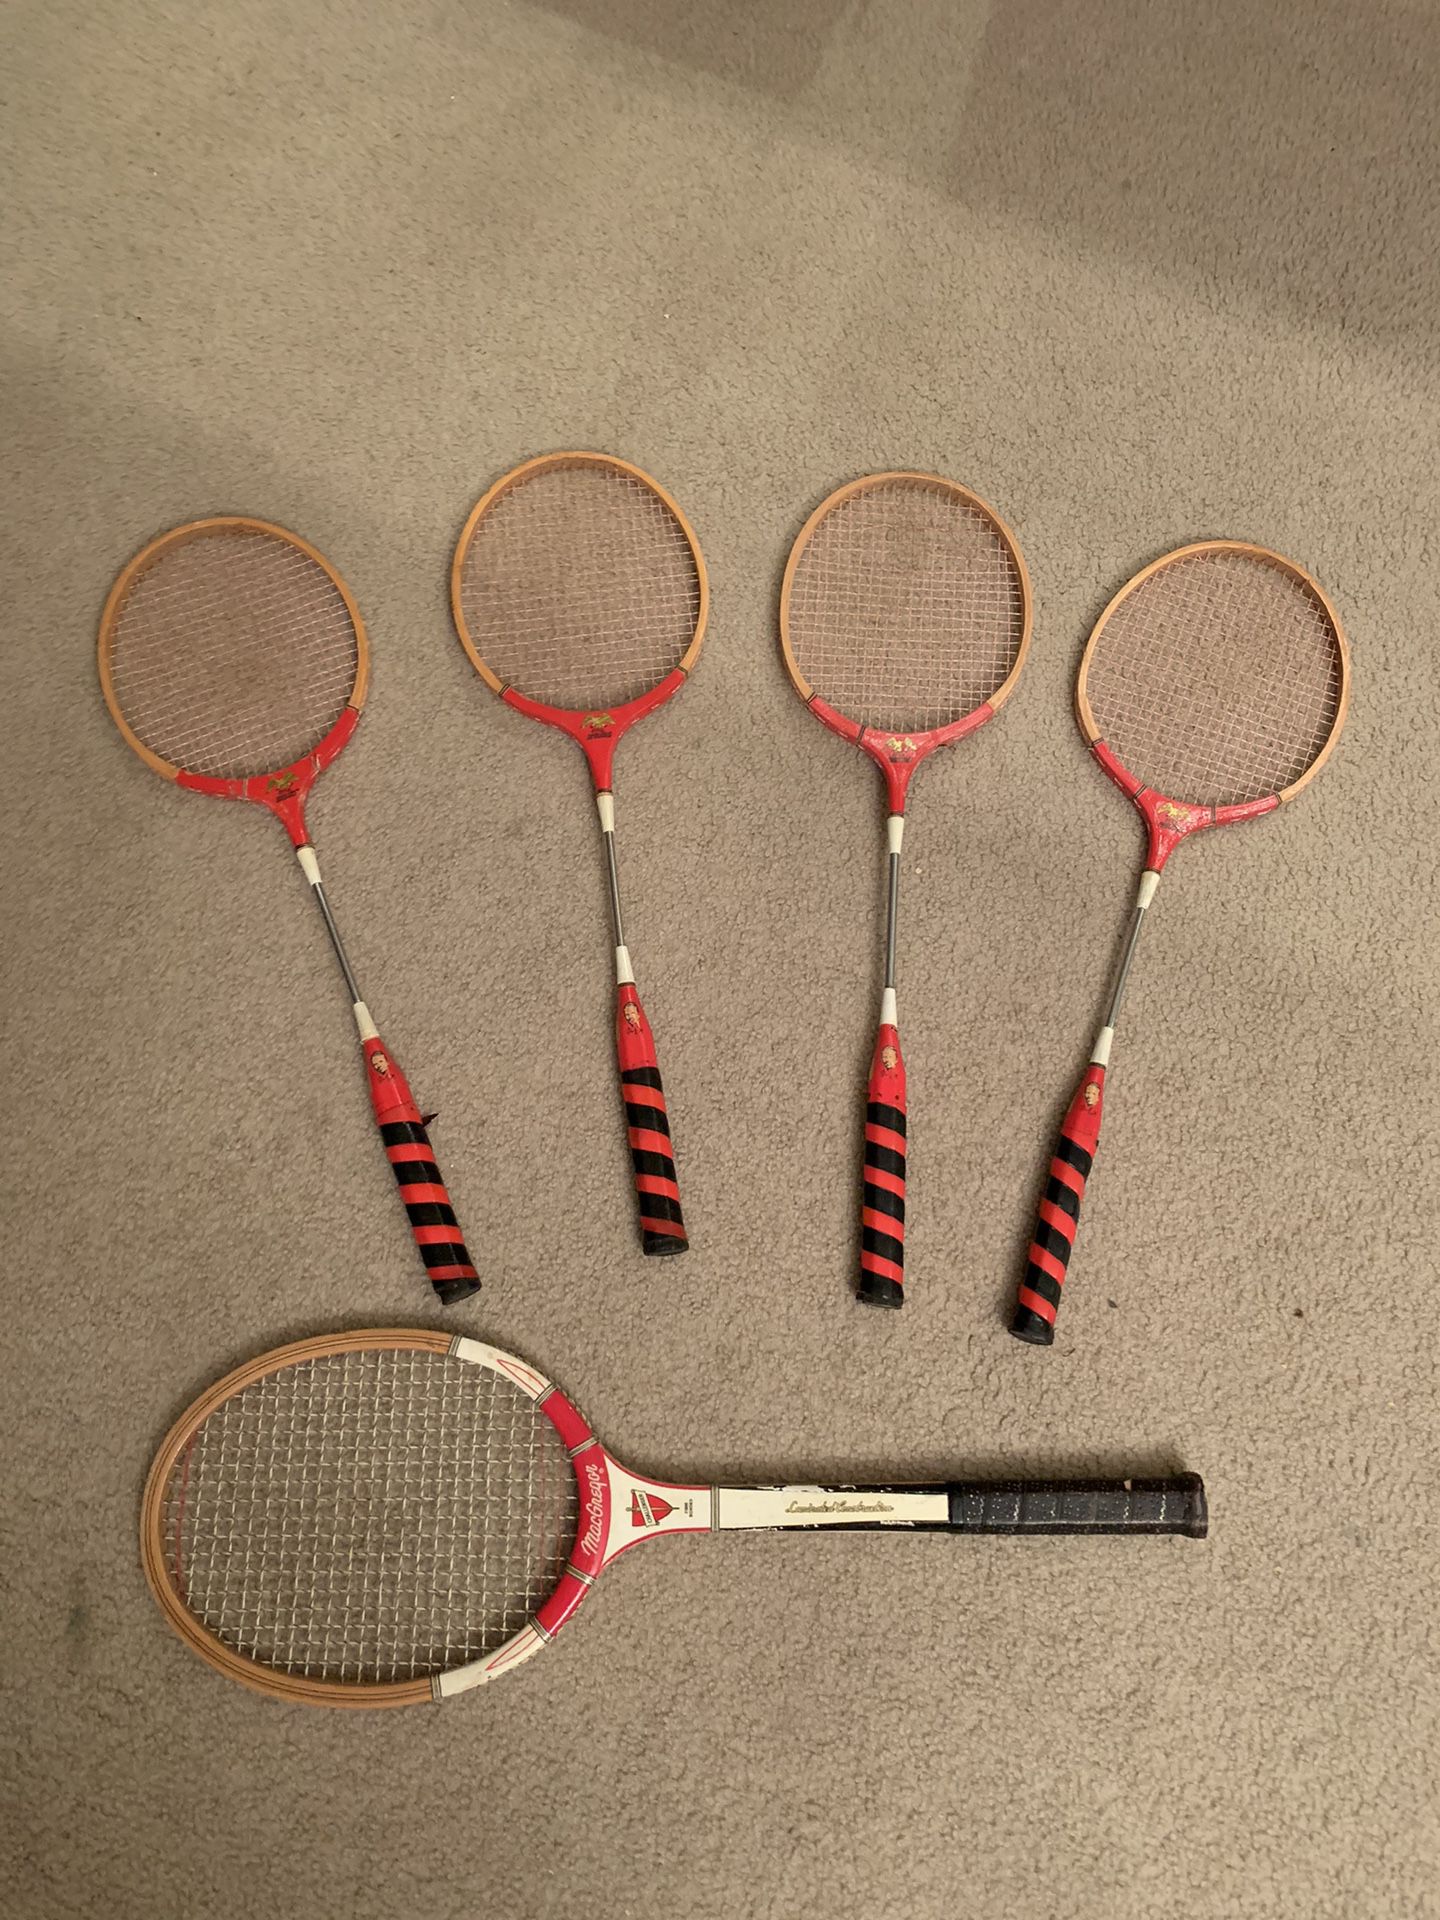 4 Vintage Badminton Racquets And 1 Tennis Racquet